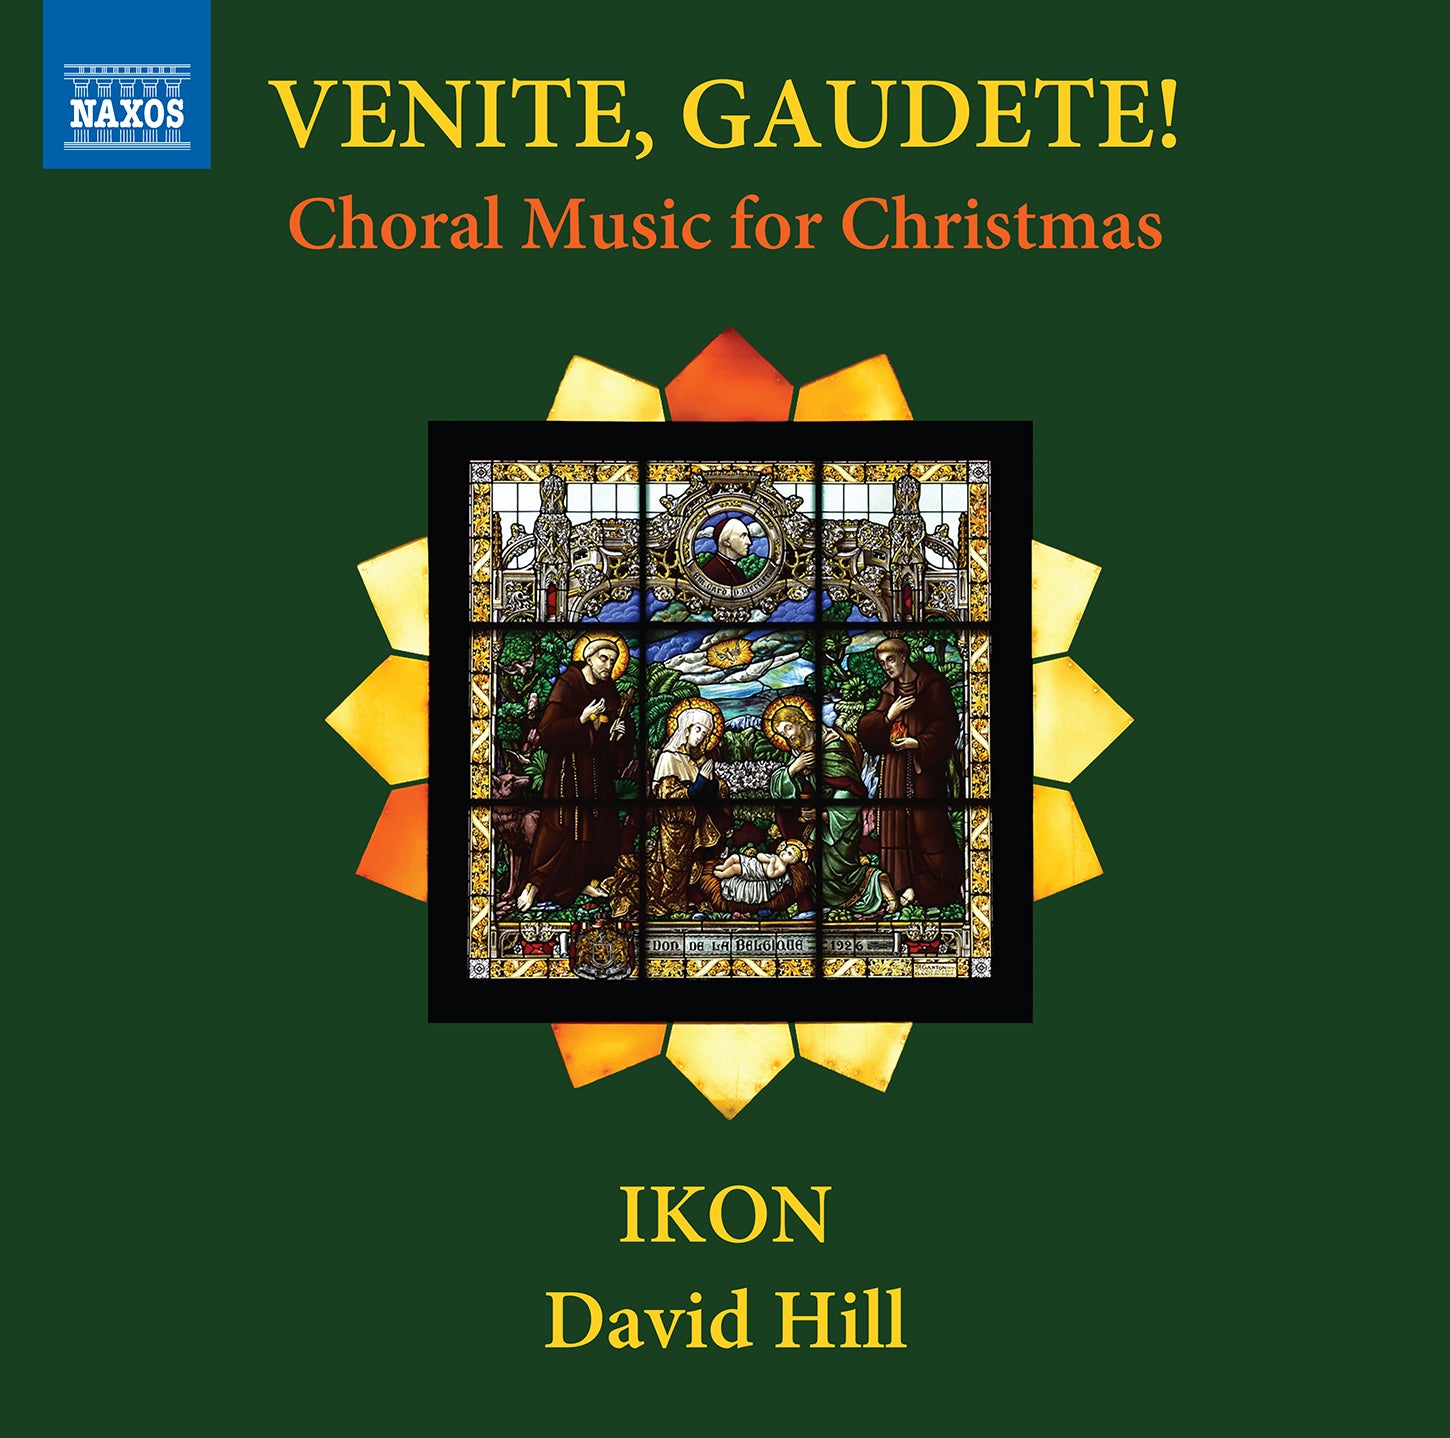 Venite, Gaudete! – Choral Music for Christmas / Ikon